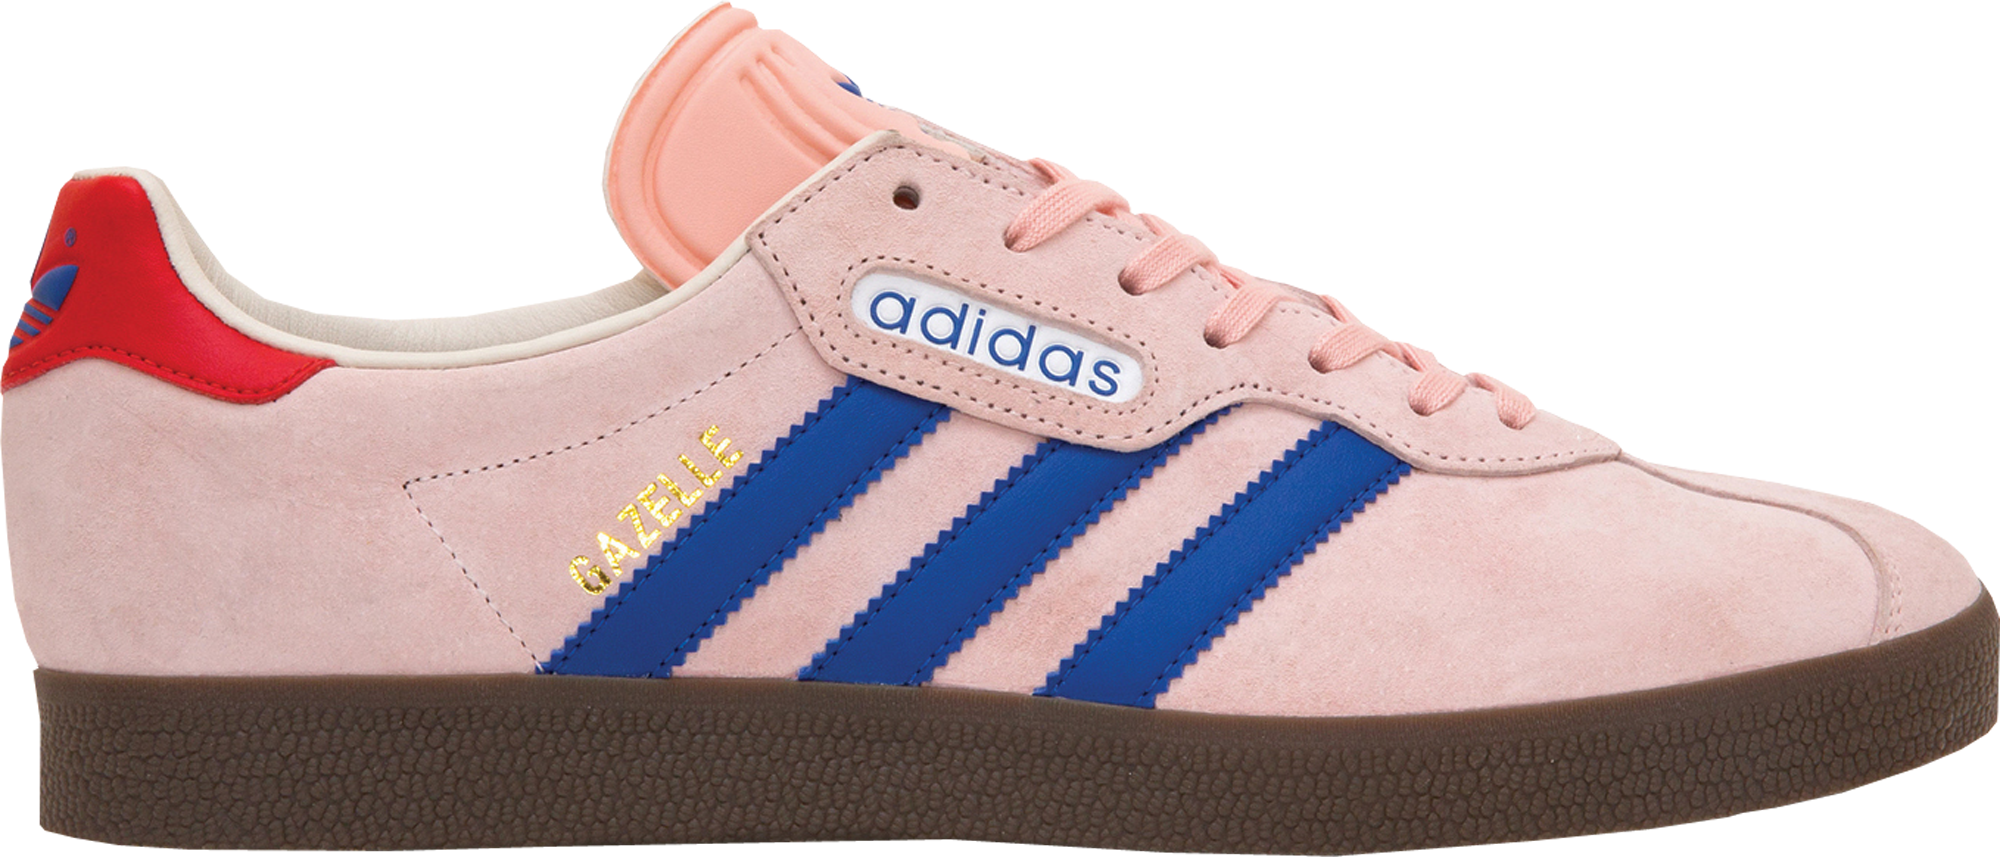 adidas gazelle blue pink